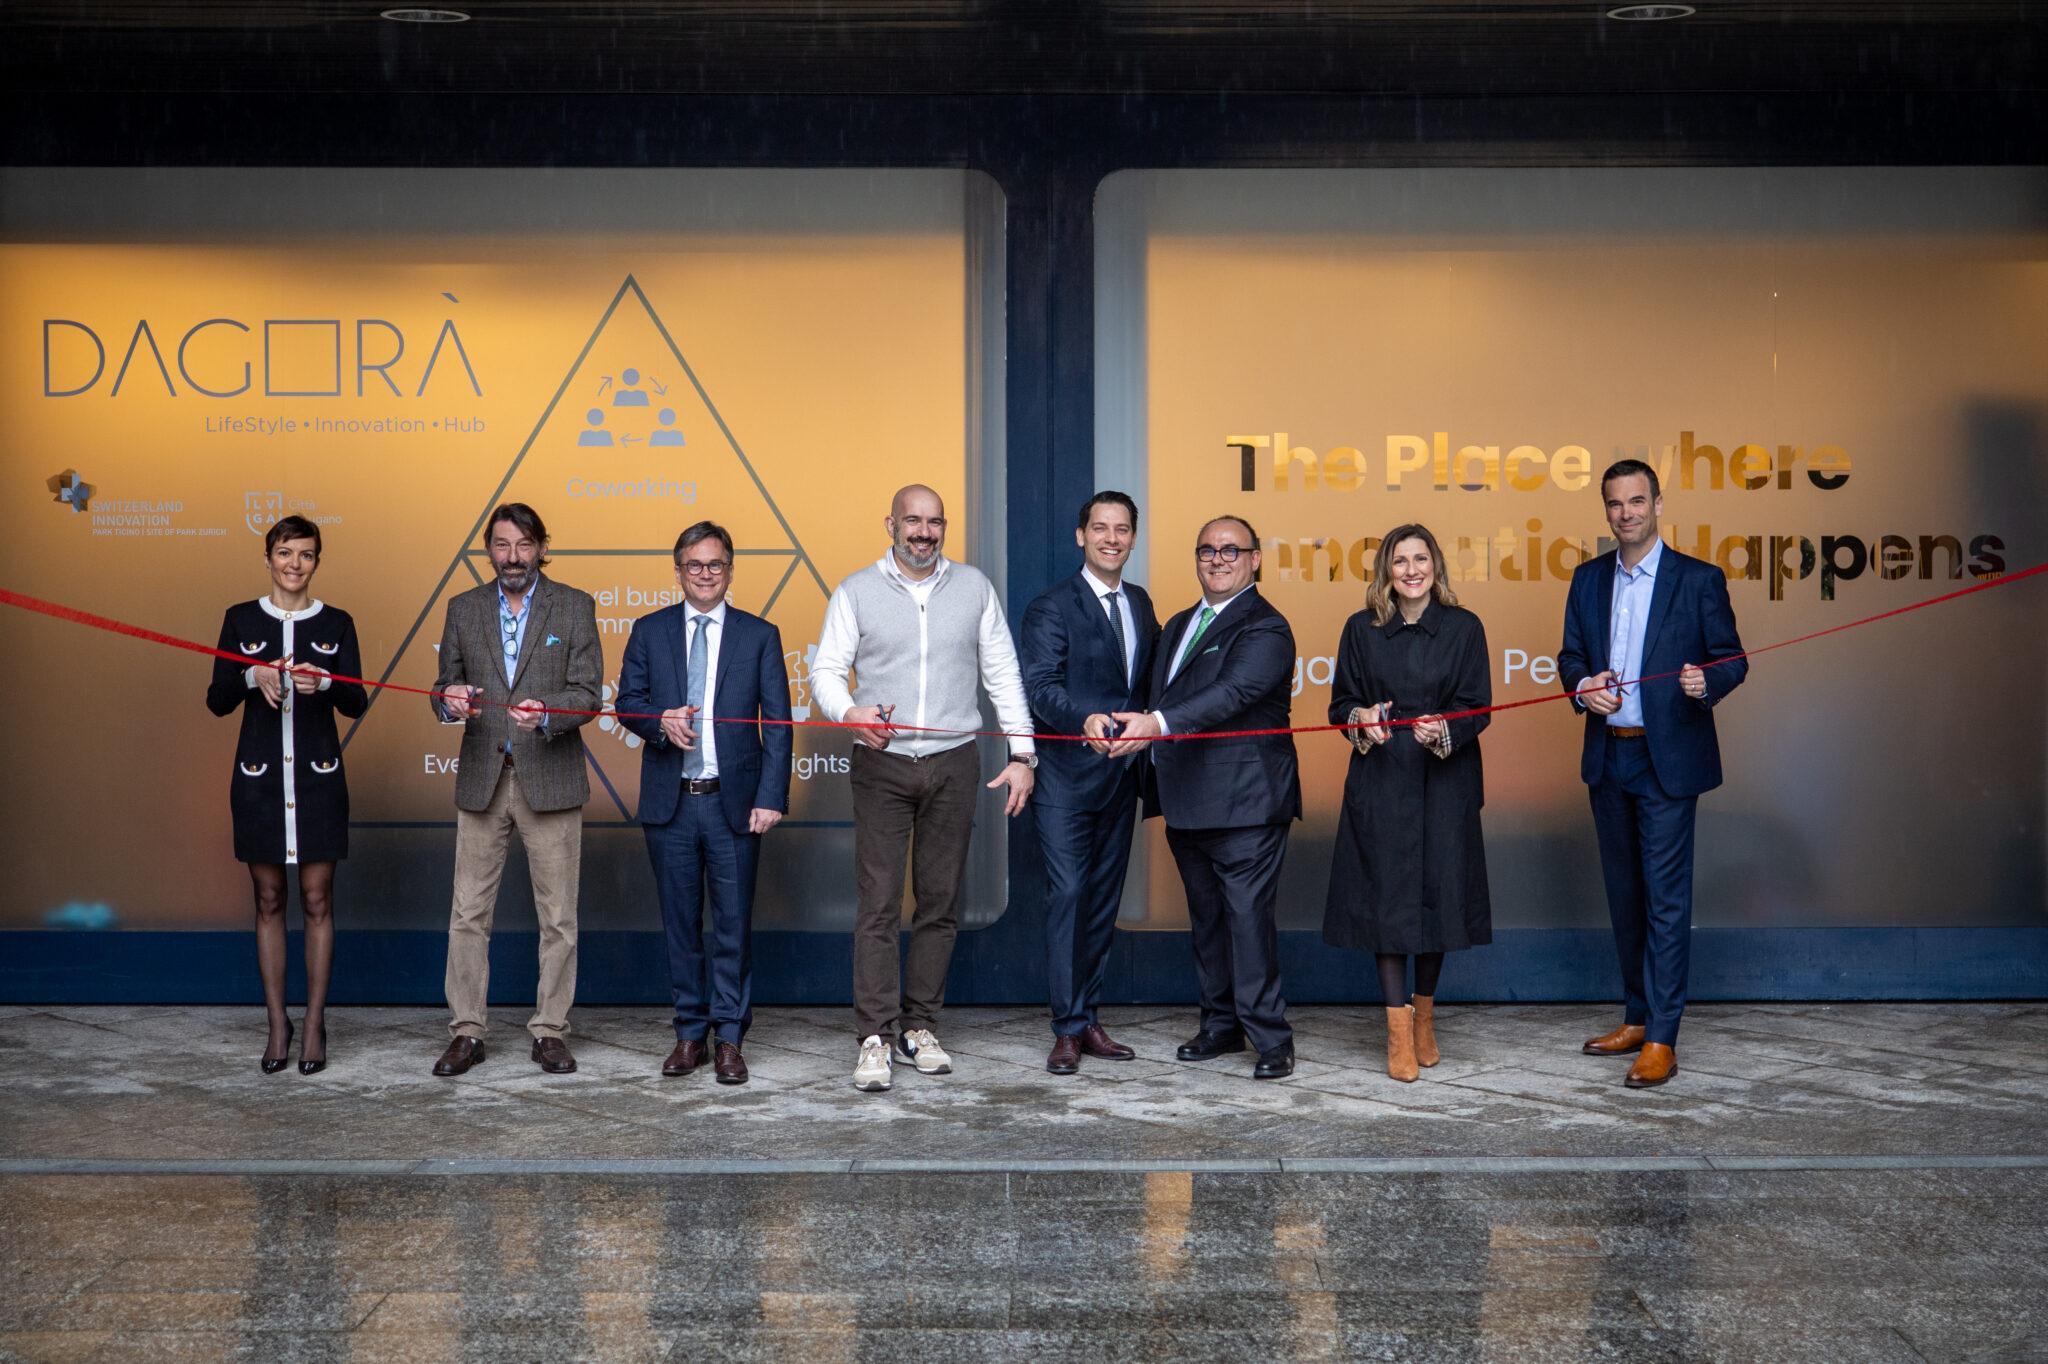 Dagorà Lifestyle Innovation Hub opens in Lugano